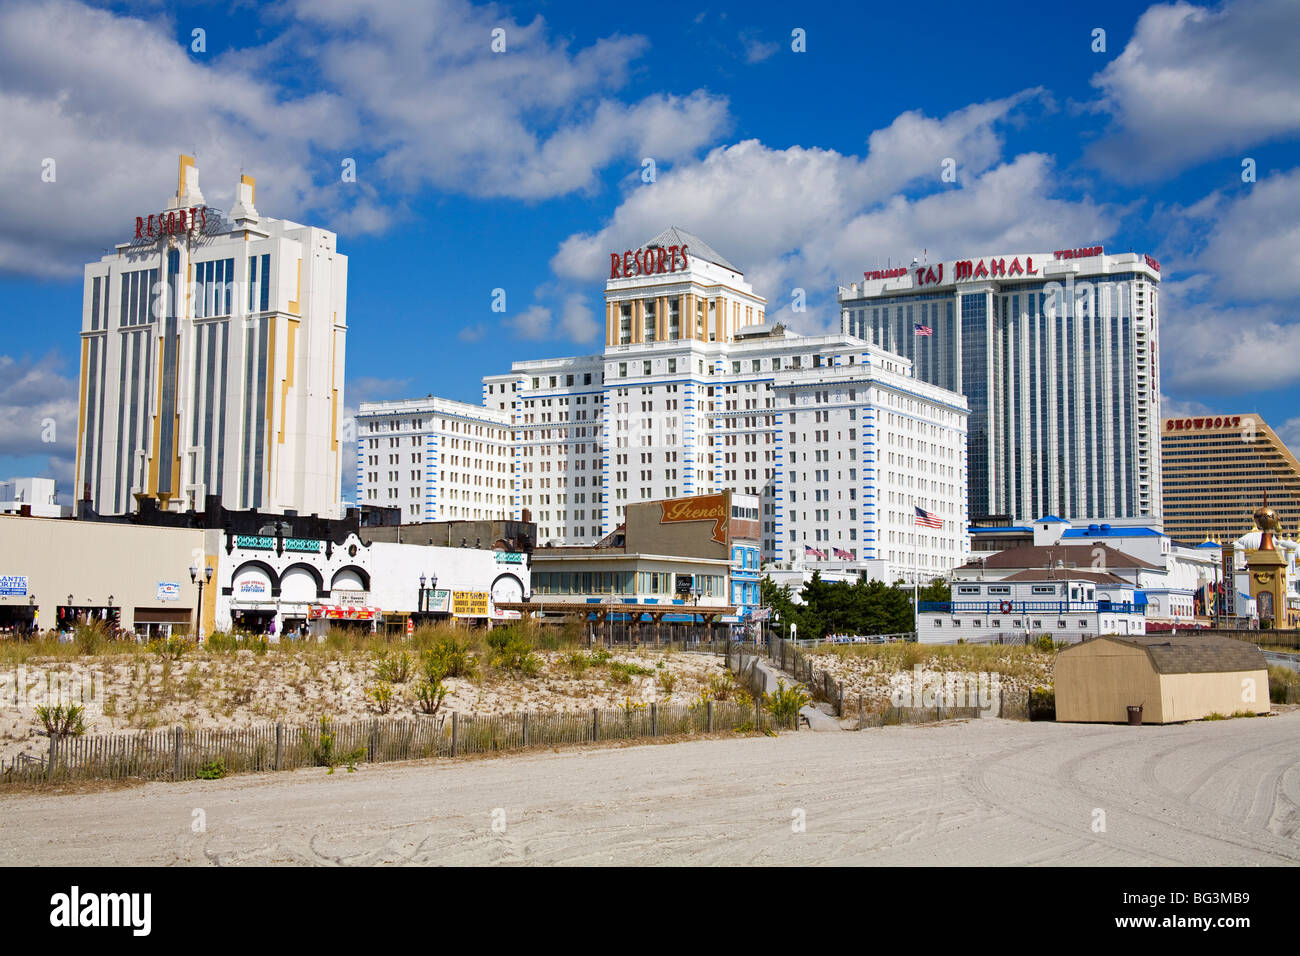 casinos atlantic city open